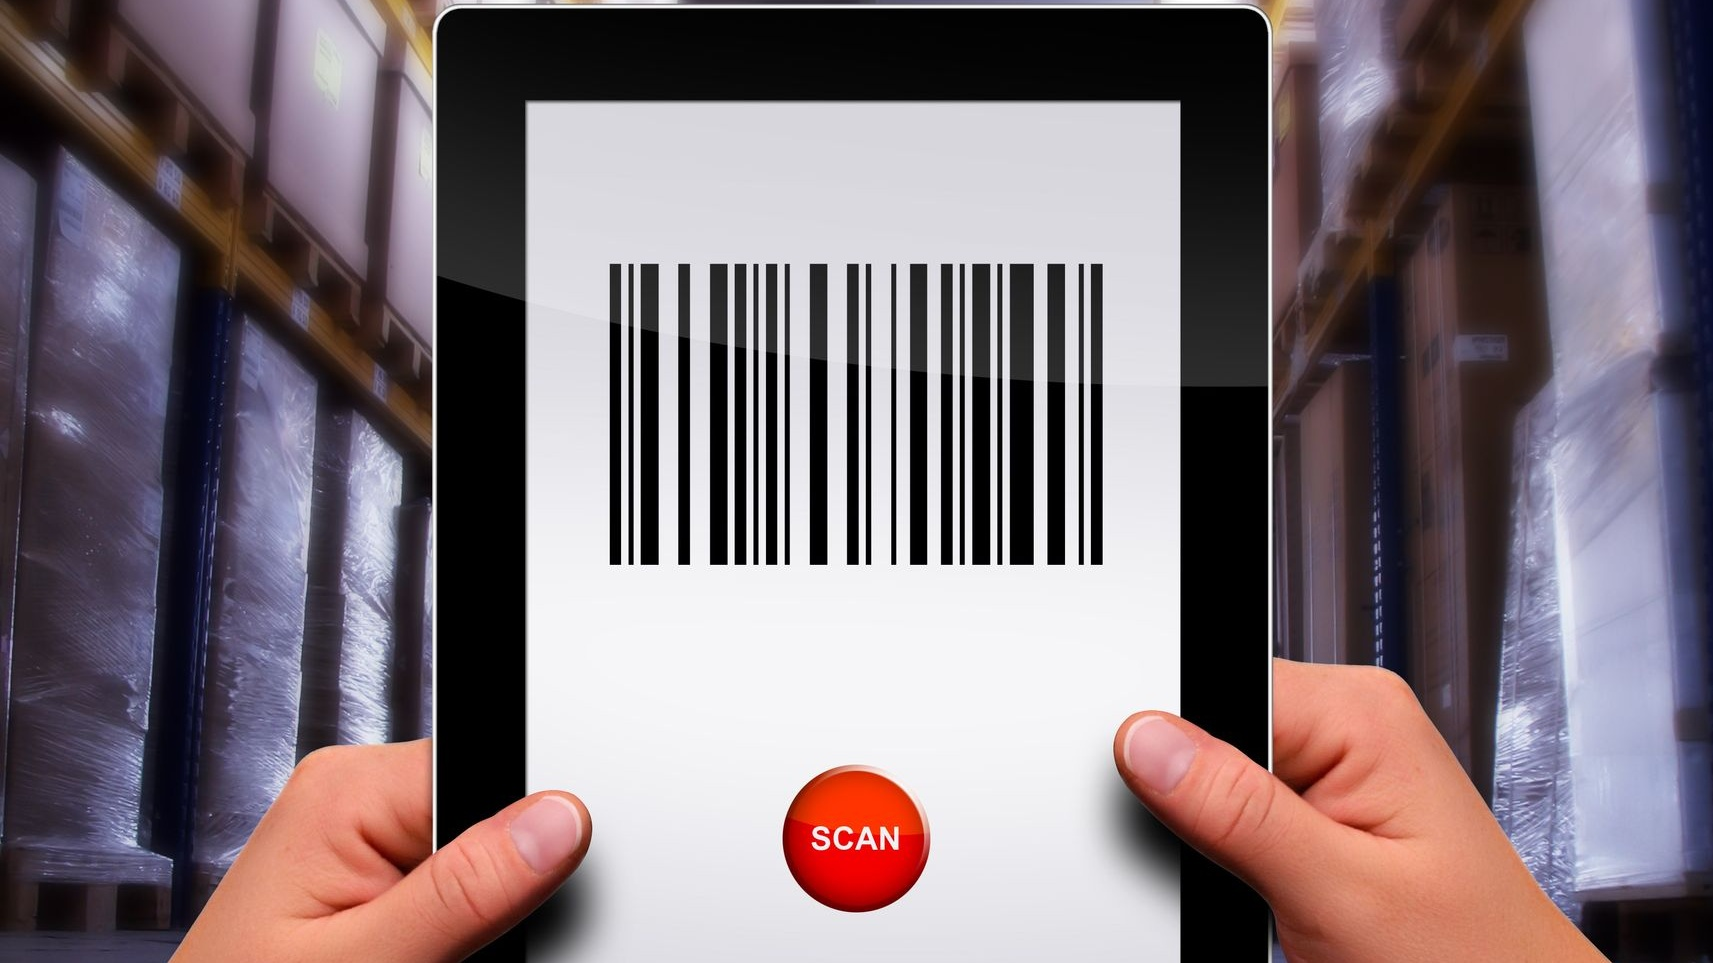 Groothandel Wasco bindt klanten met RFID tags